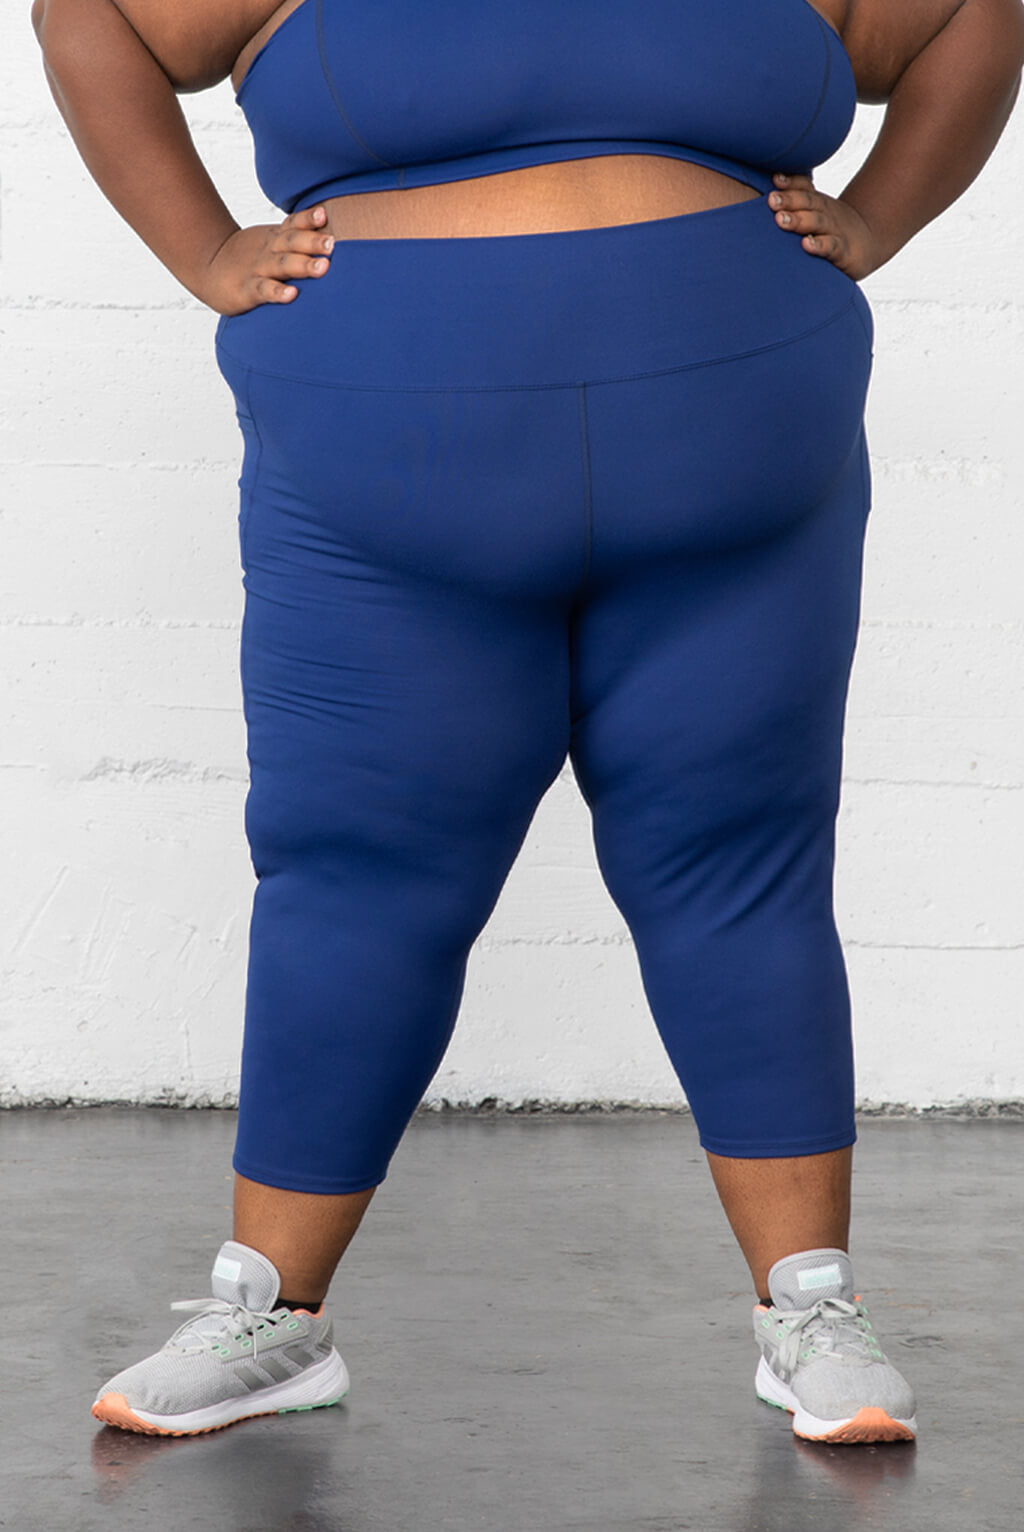 Plus Size Womens Stretch Capri Skinny Pants Ladies Cropped Workout